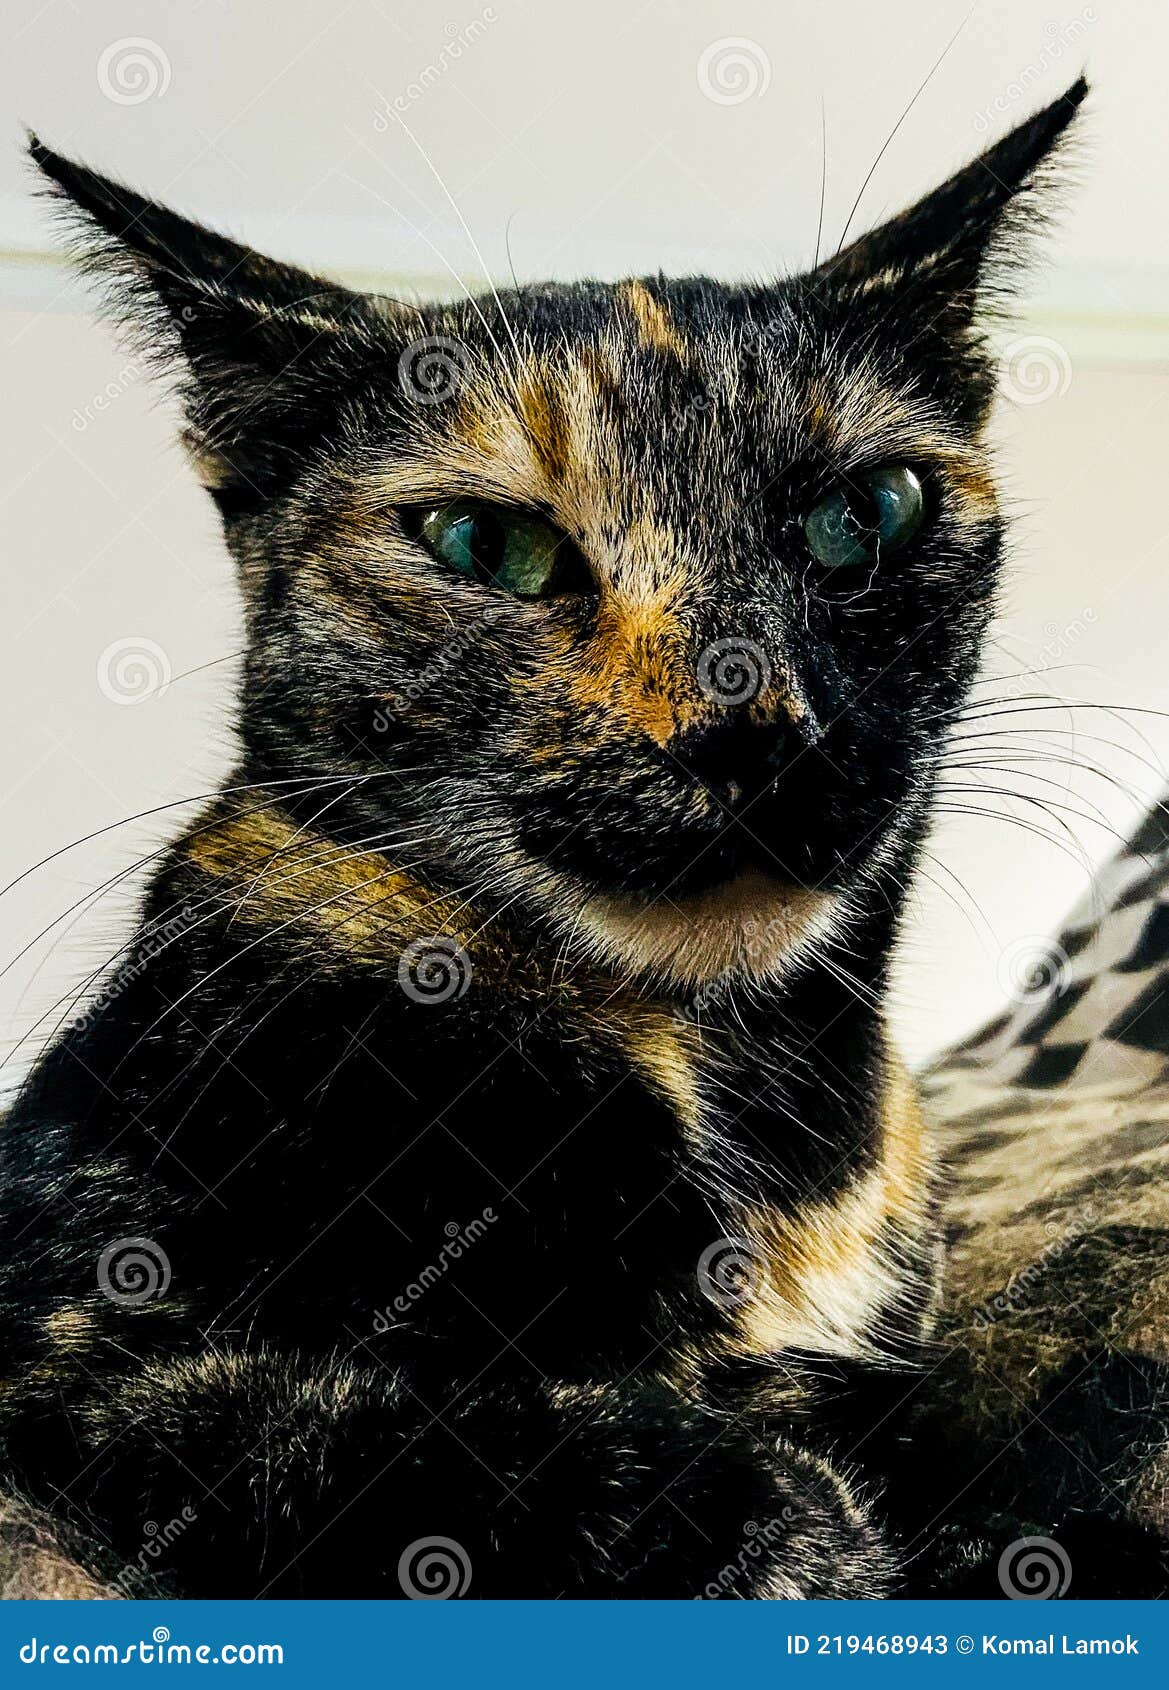 a cats face closep look.cat posing to the camera